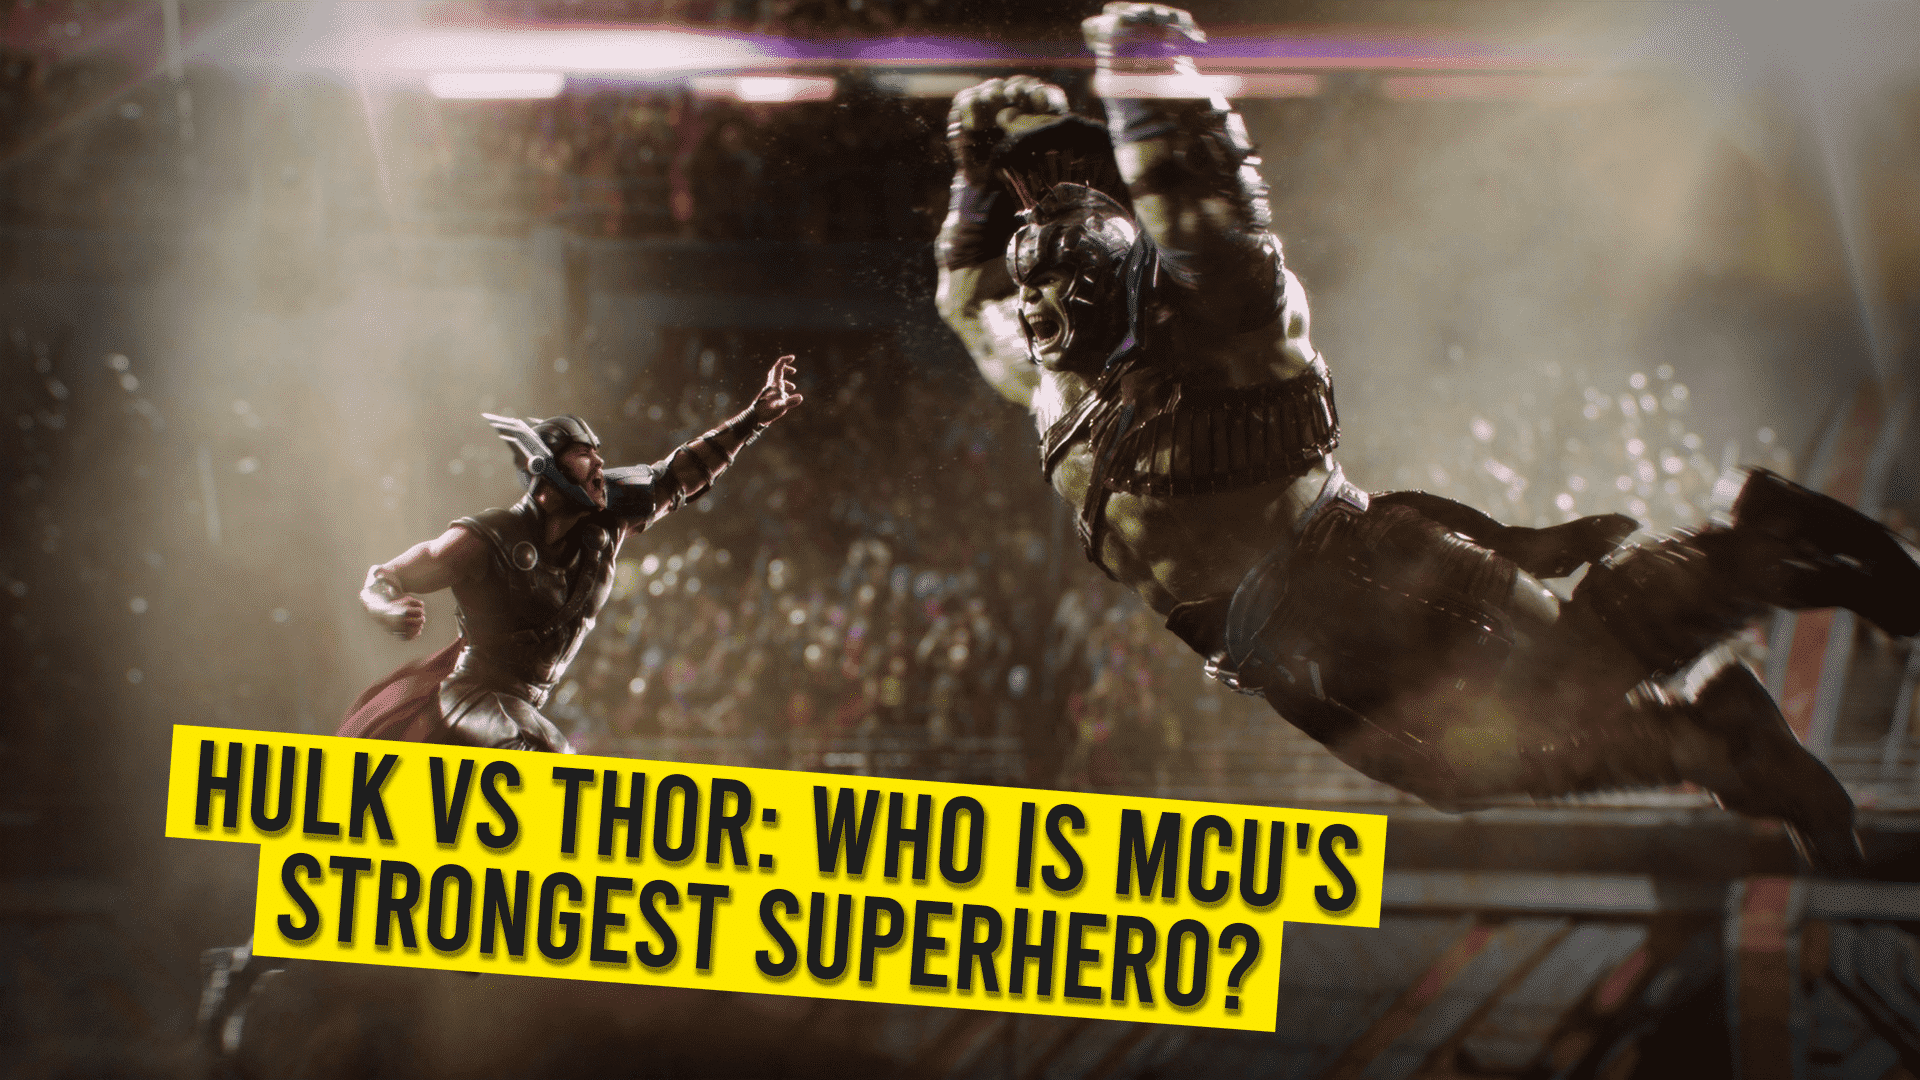 Hulk VS Thor: Who is MCU’s Strongest Superhero?